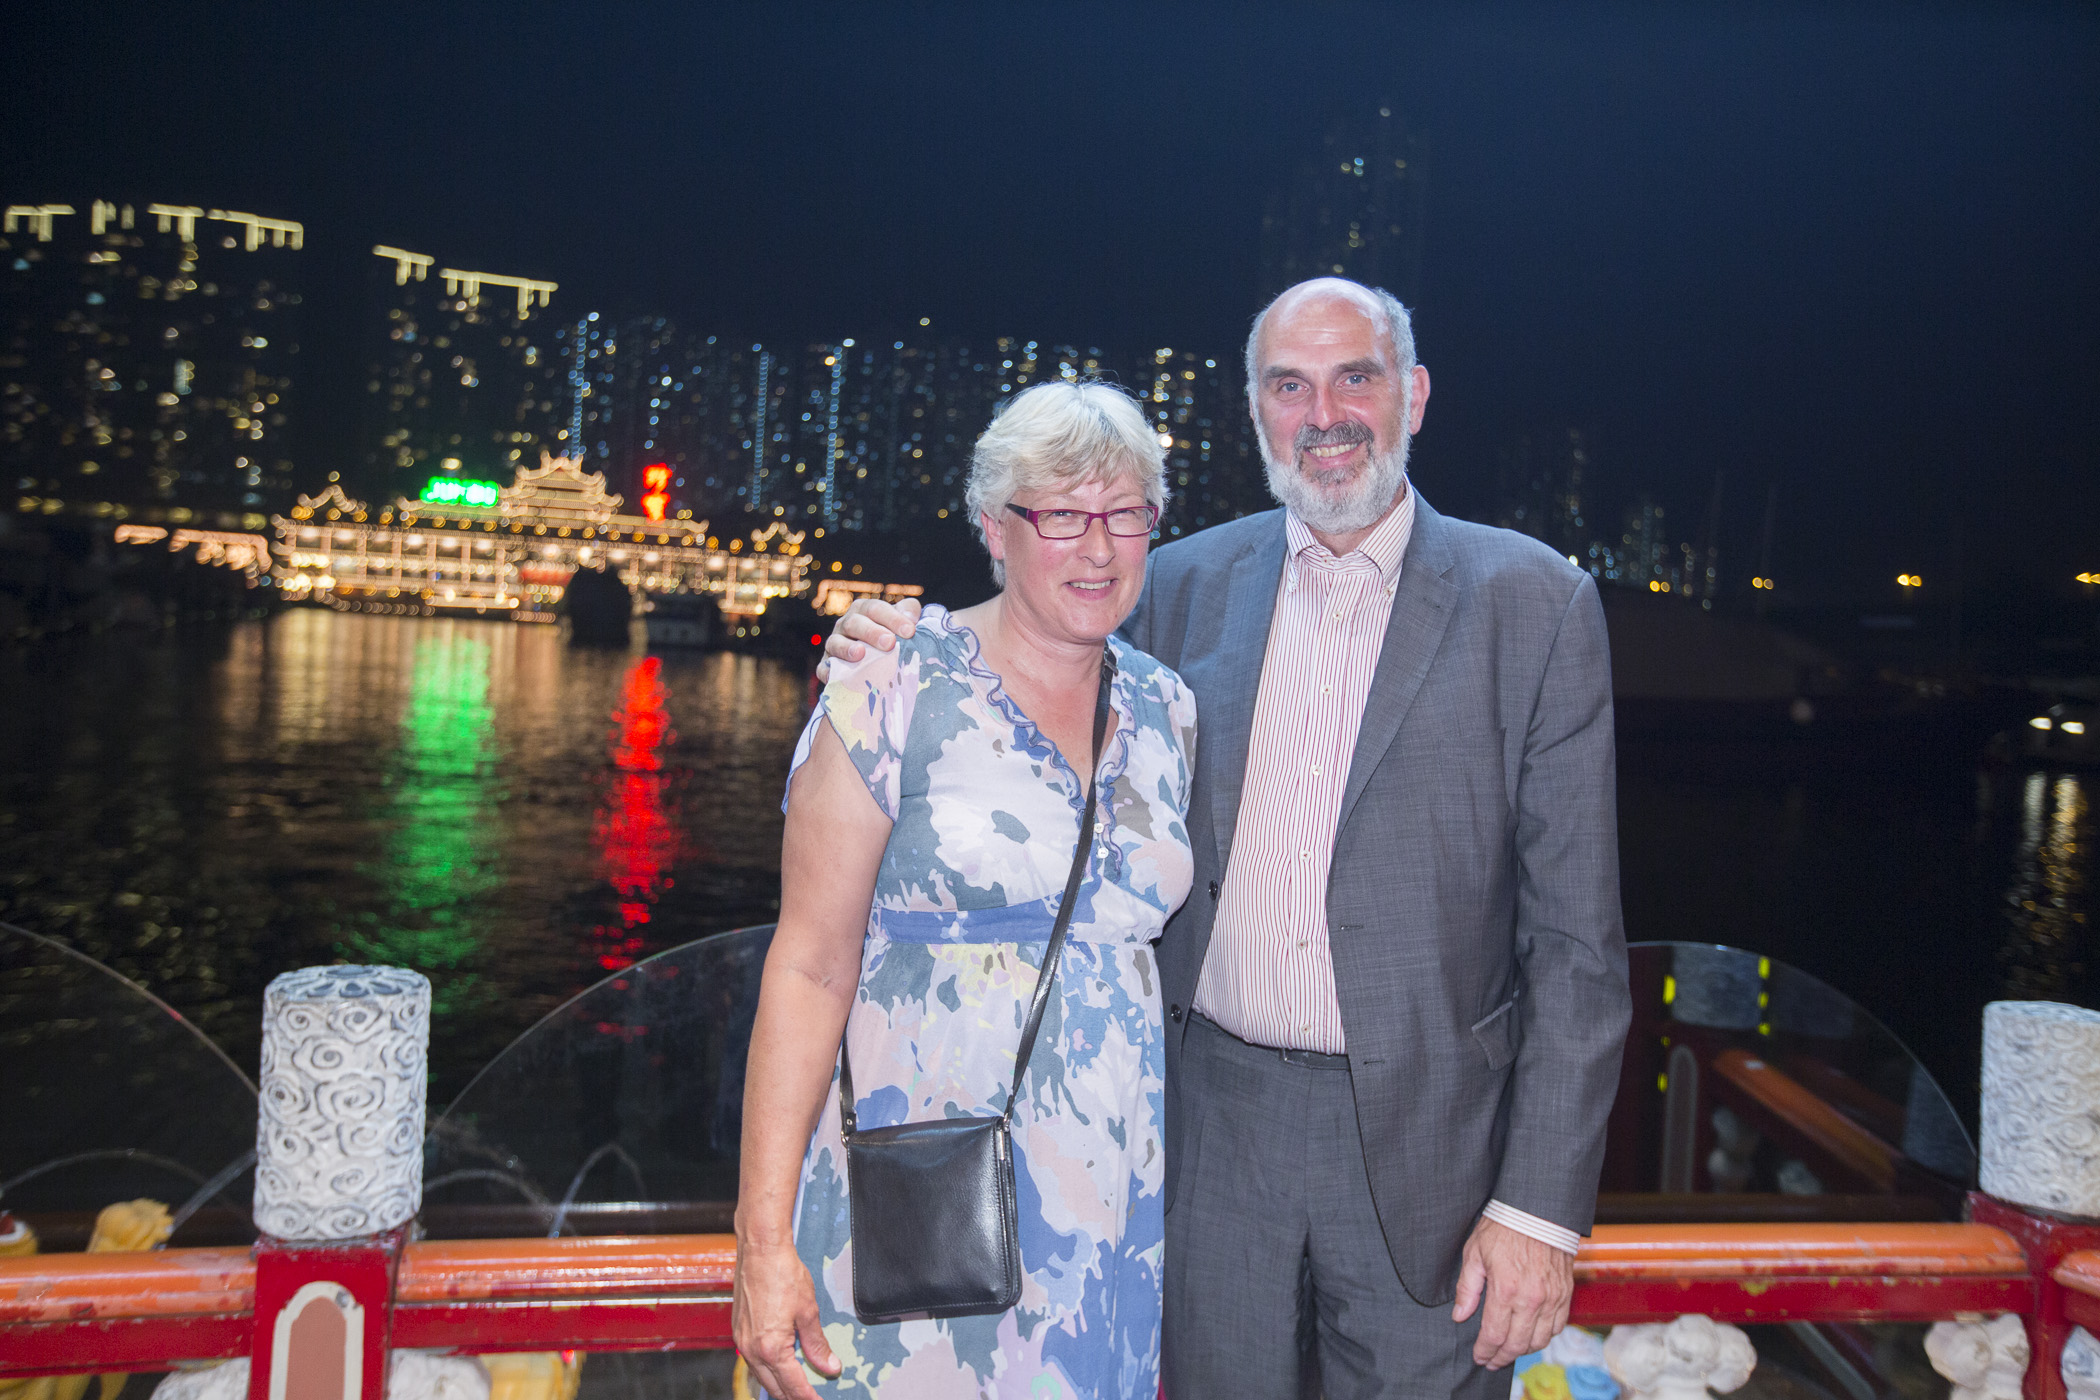 International Union of Marine Insurance 2014 Hong Kong Evening (outside the Palace)